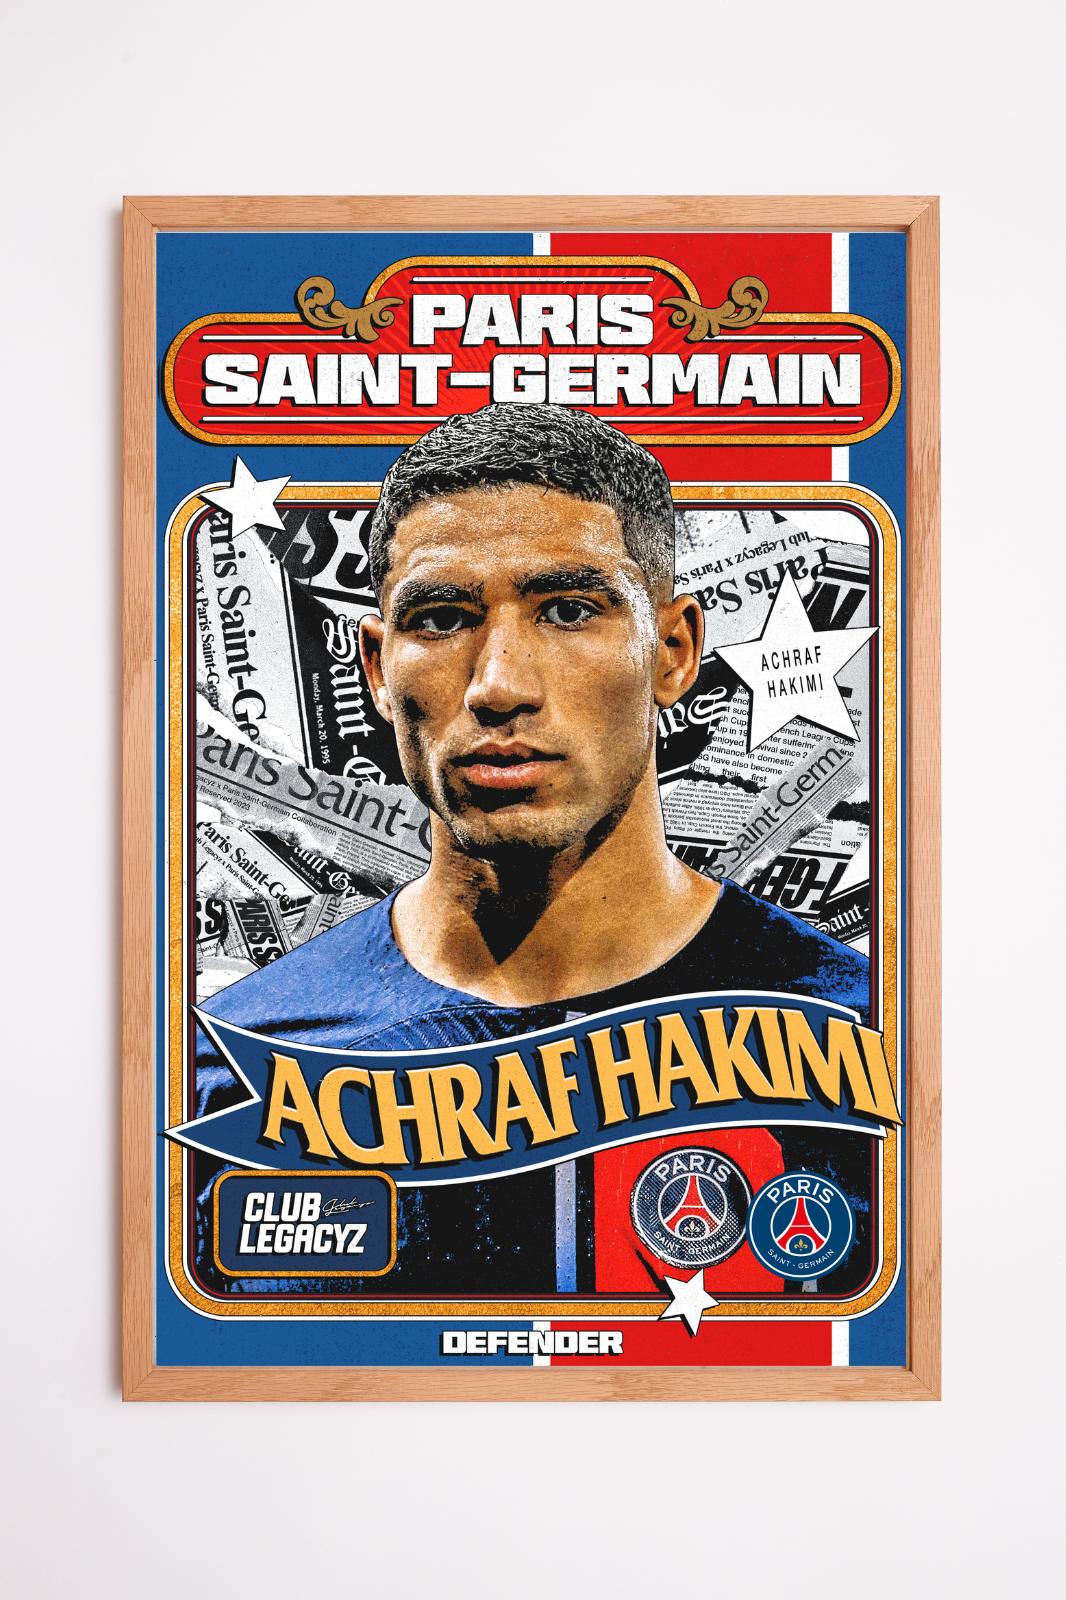 Paris Saint-Germain - Achraf Hakimi Retro Poster limited to 100